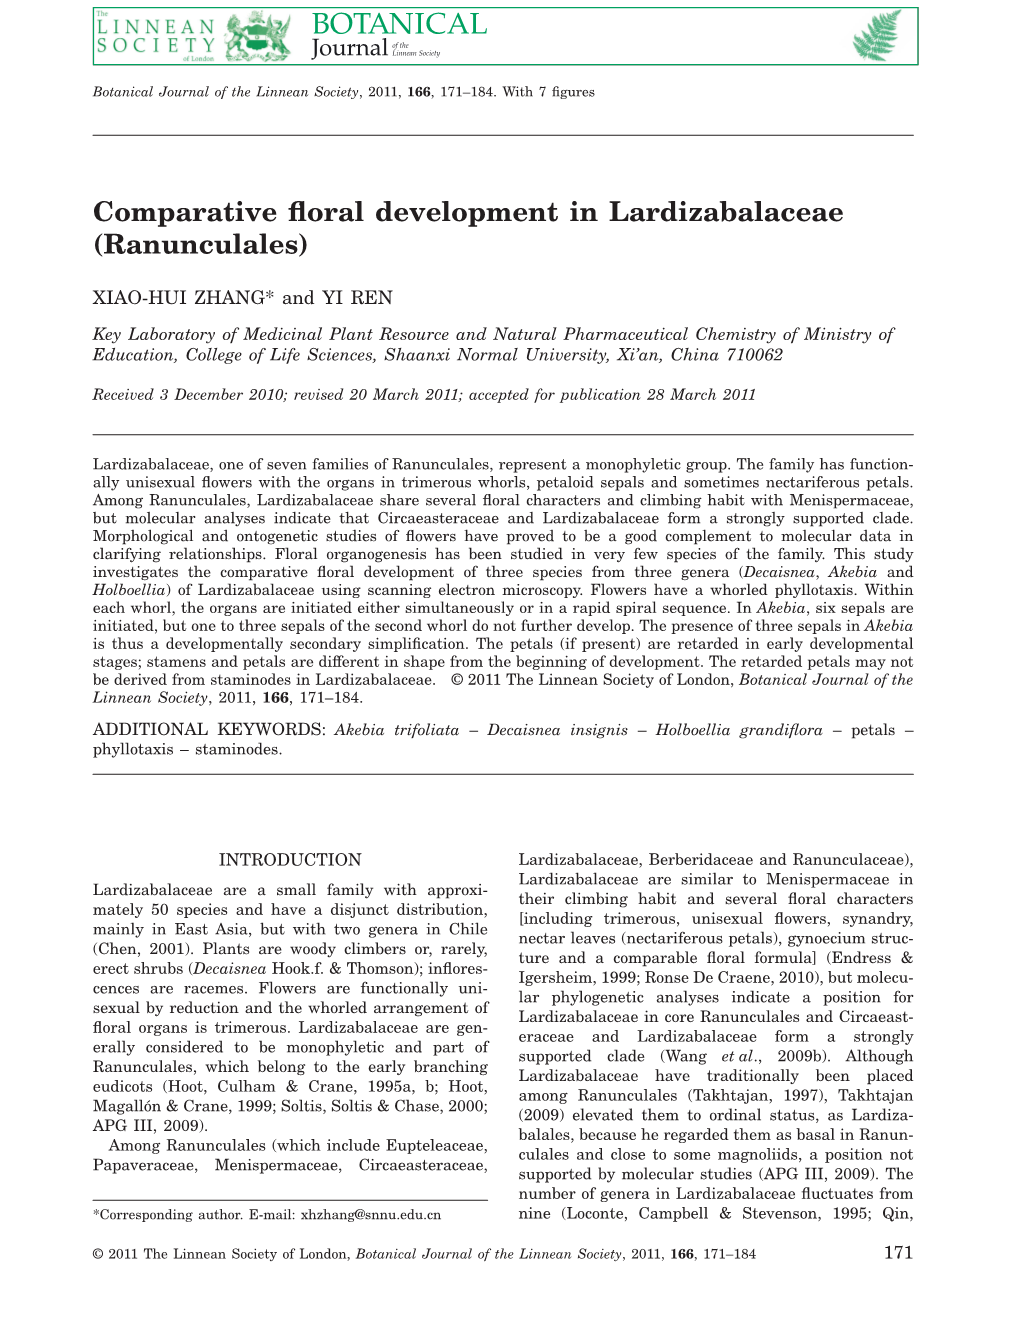 Comparative Floral Development in Lardizabalaceae (Ranunculales)